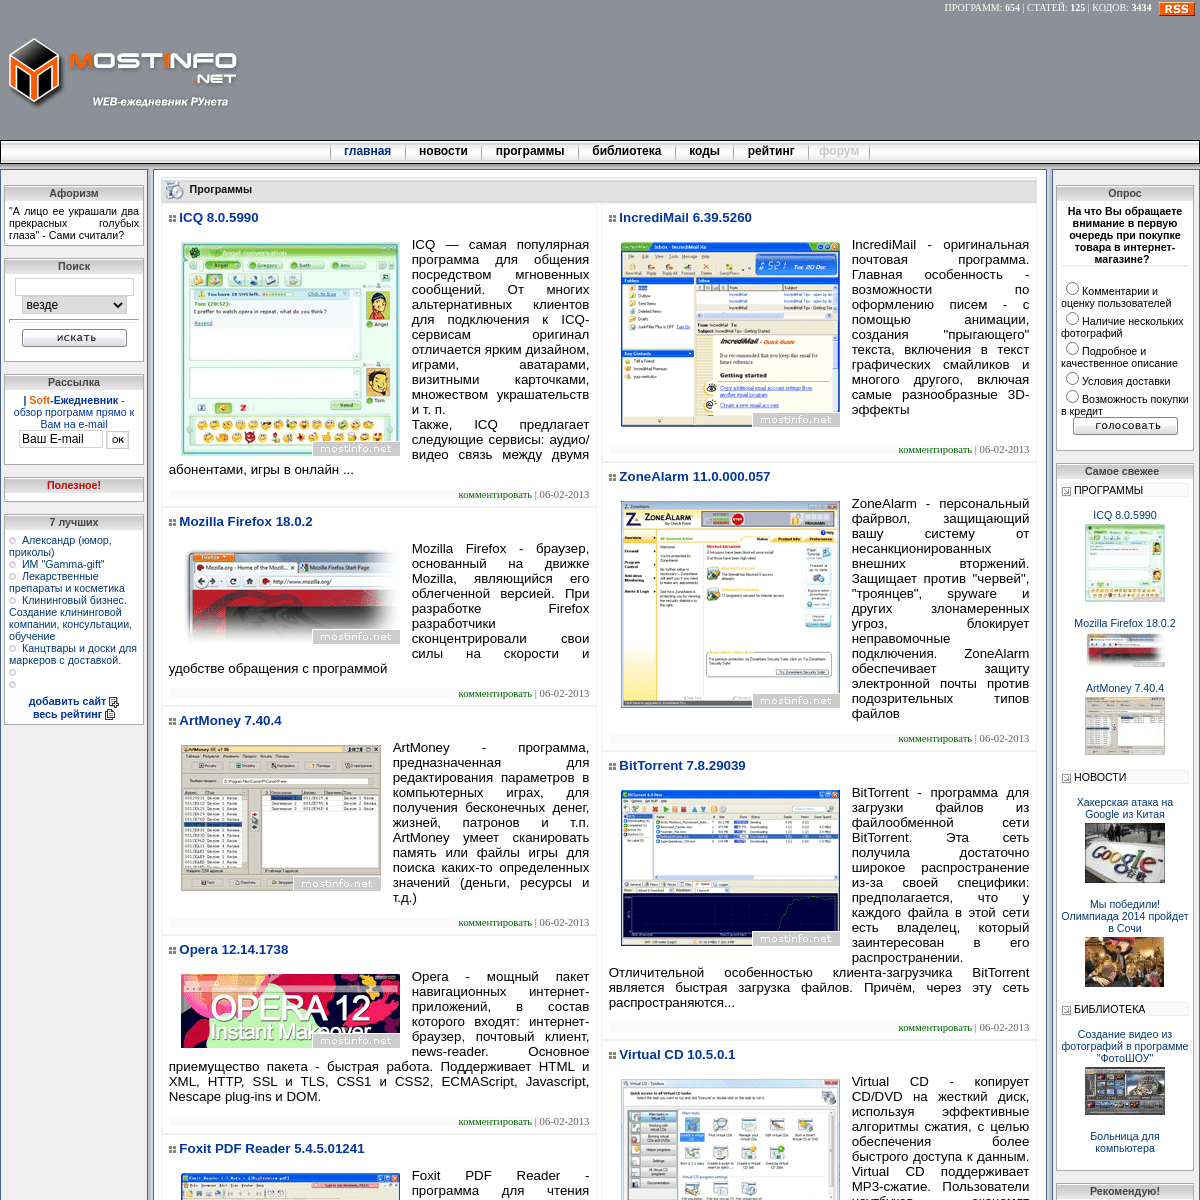 A complete backup of mostinfo.net